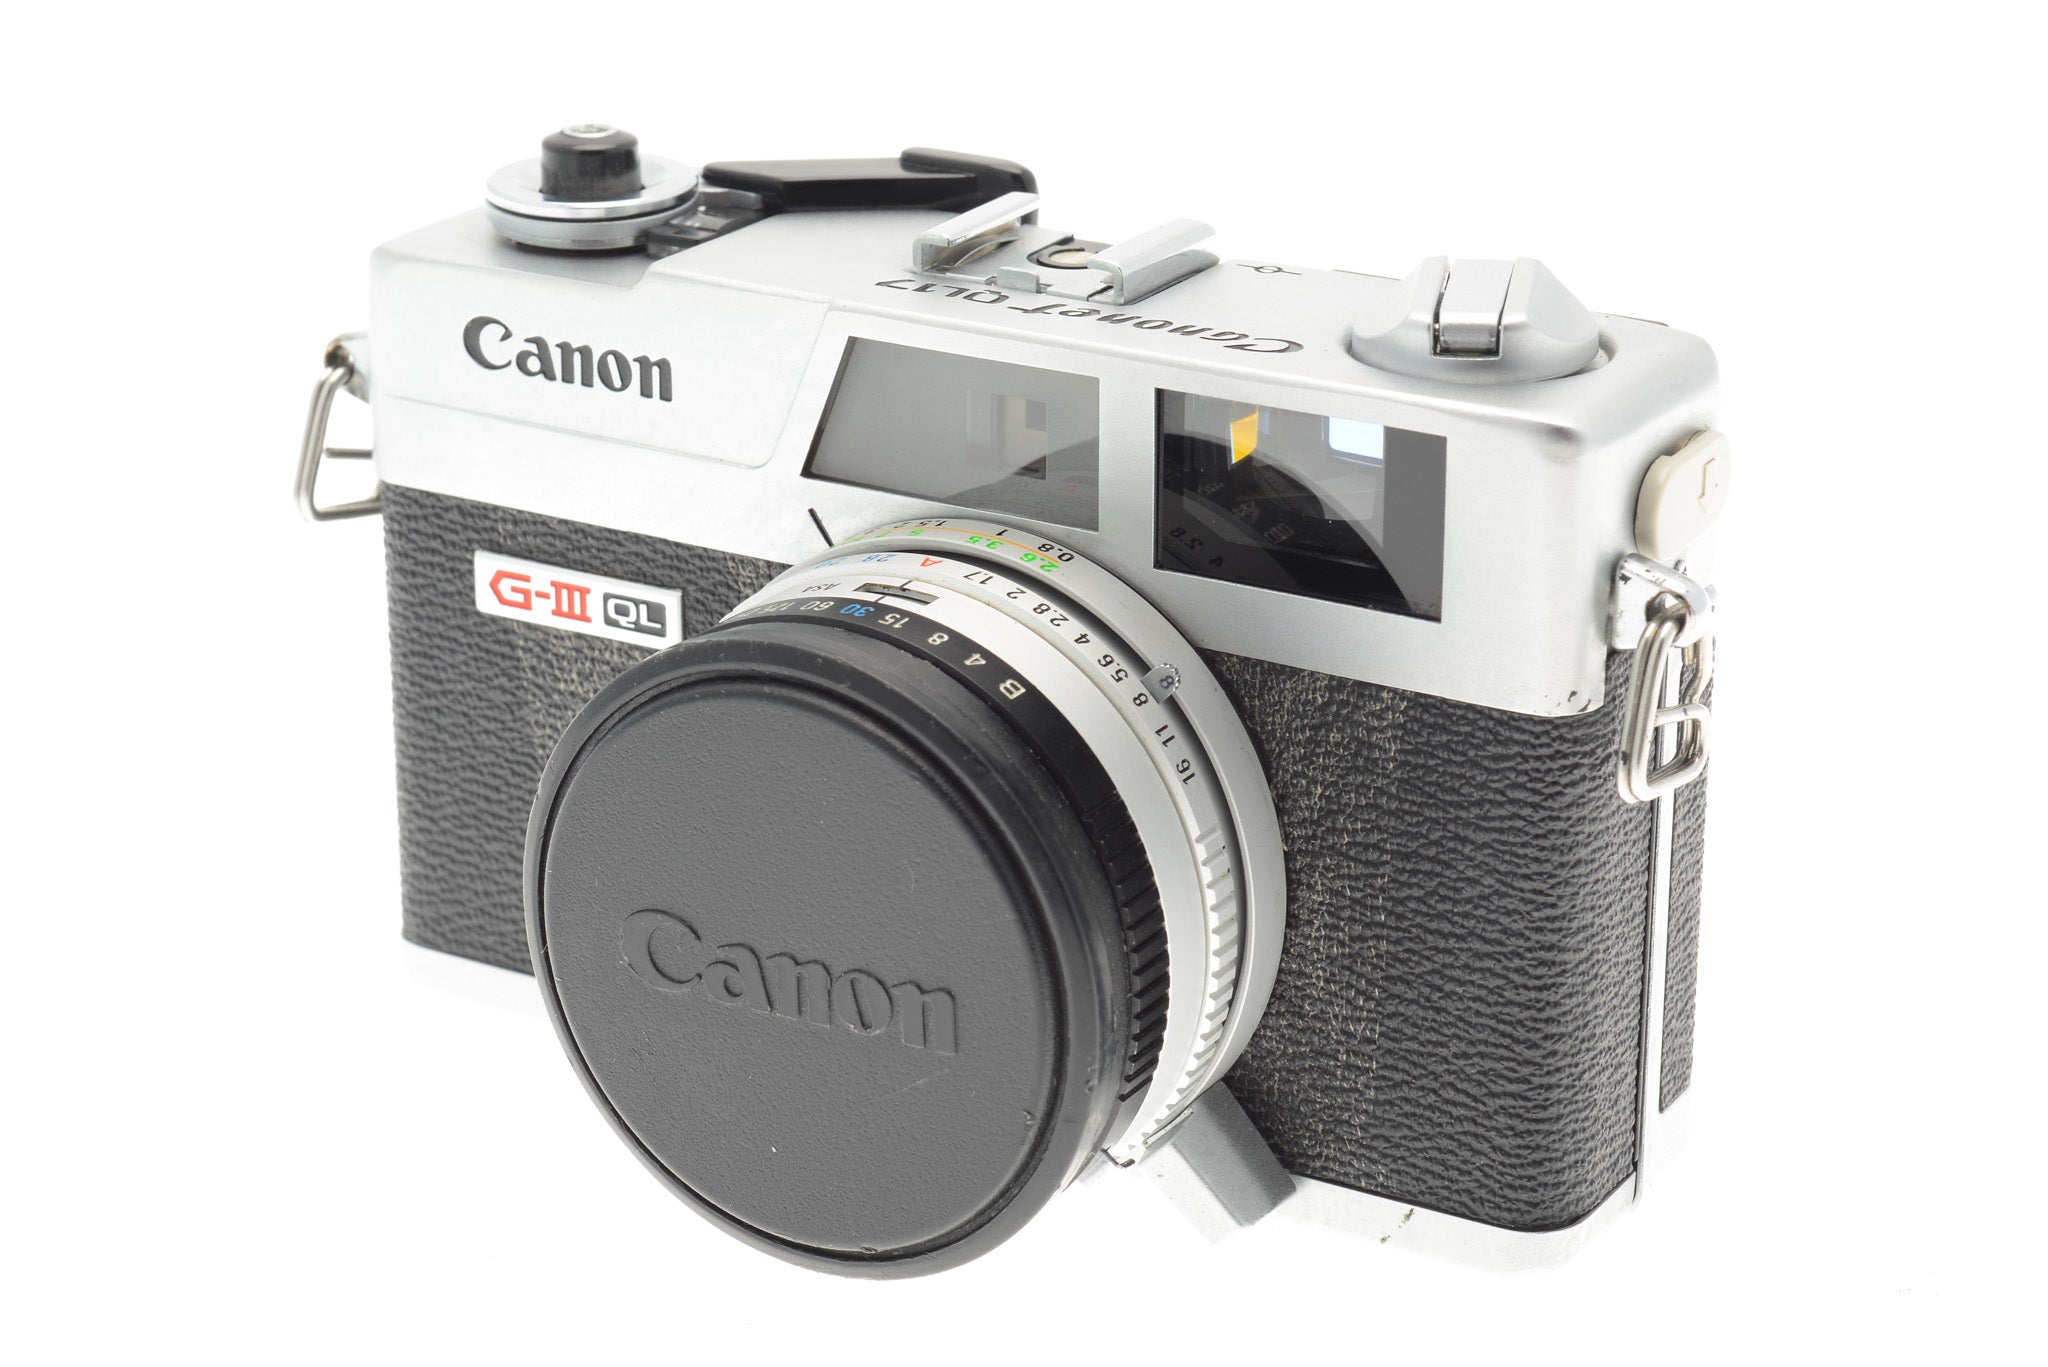 Canon Canonet QL17 G-III - Camera